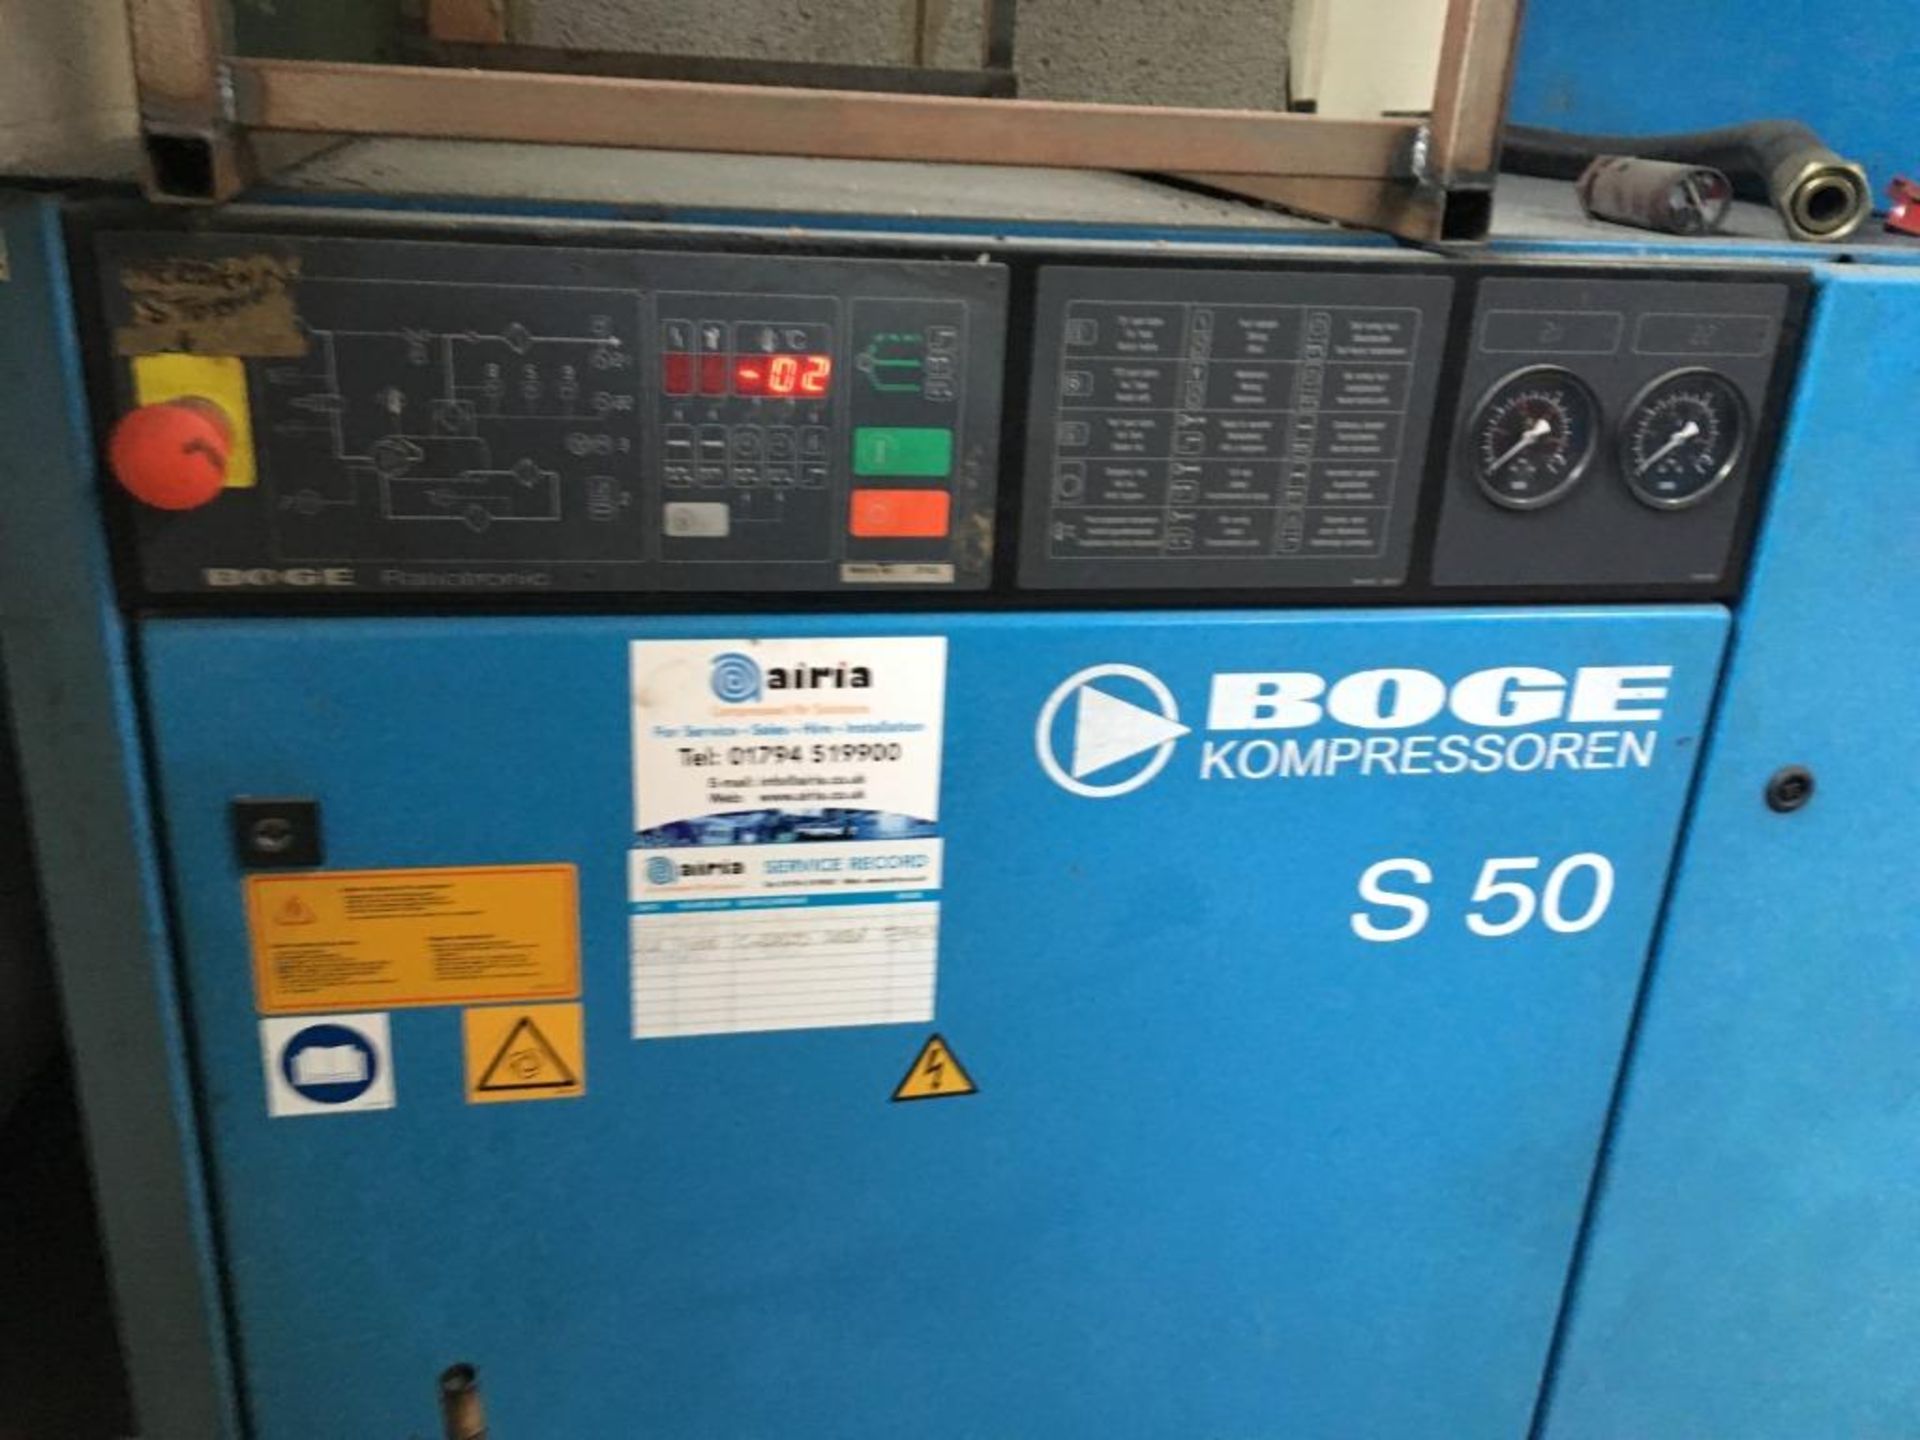 Boge Kompressoren S50 air compressor, machine no. 27532 with air receiver tank and filters - Image 6 of 6